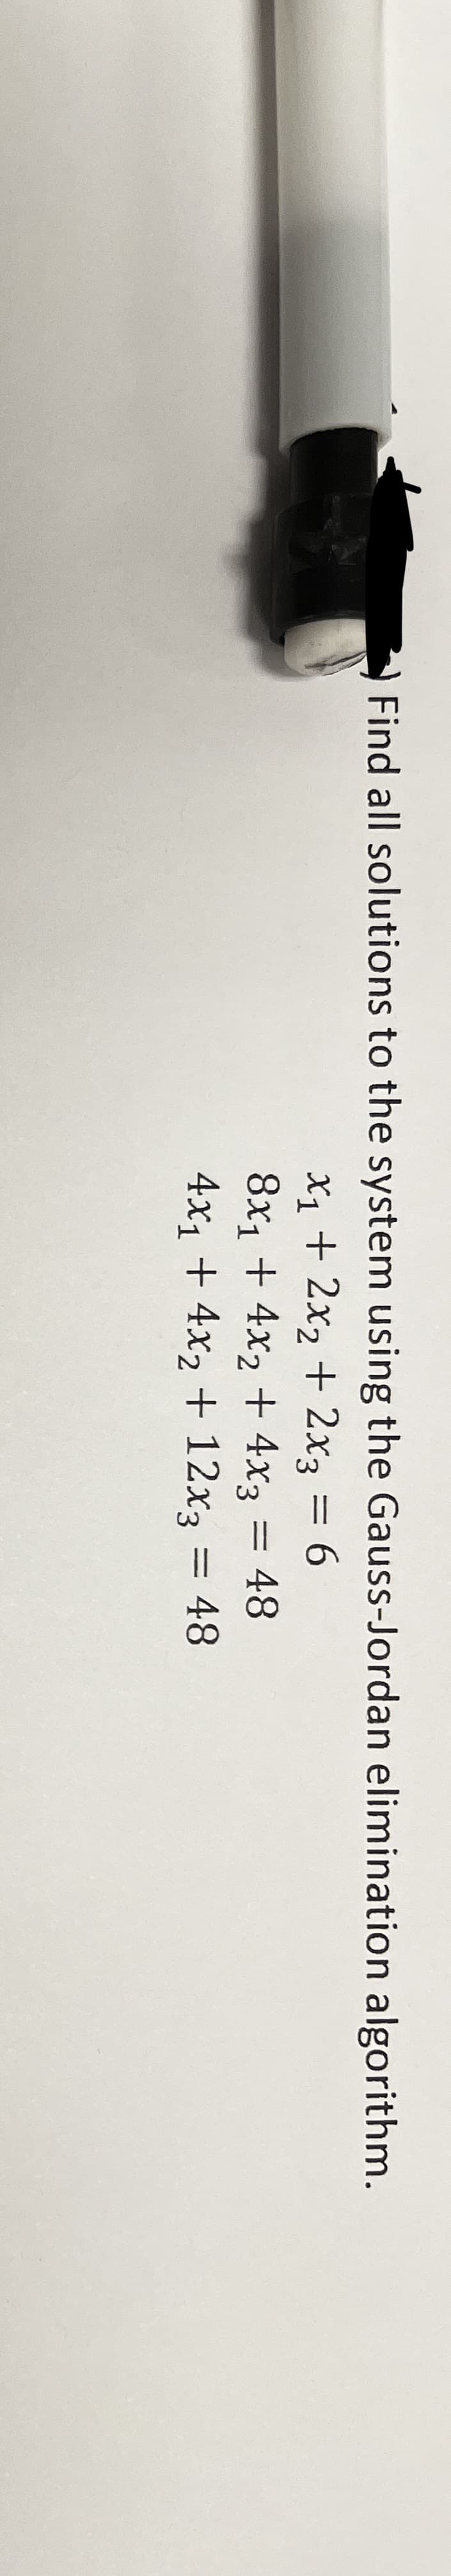 Find all solutions to the system using the Gauss-Jordan elimination algorithm.
x₁ + 2x₂ + 2x3 = 6
8x₁ + 4x₂ + 4x3 = 48
4x₁ + 4x2 + 12x3
= 48